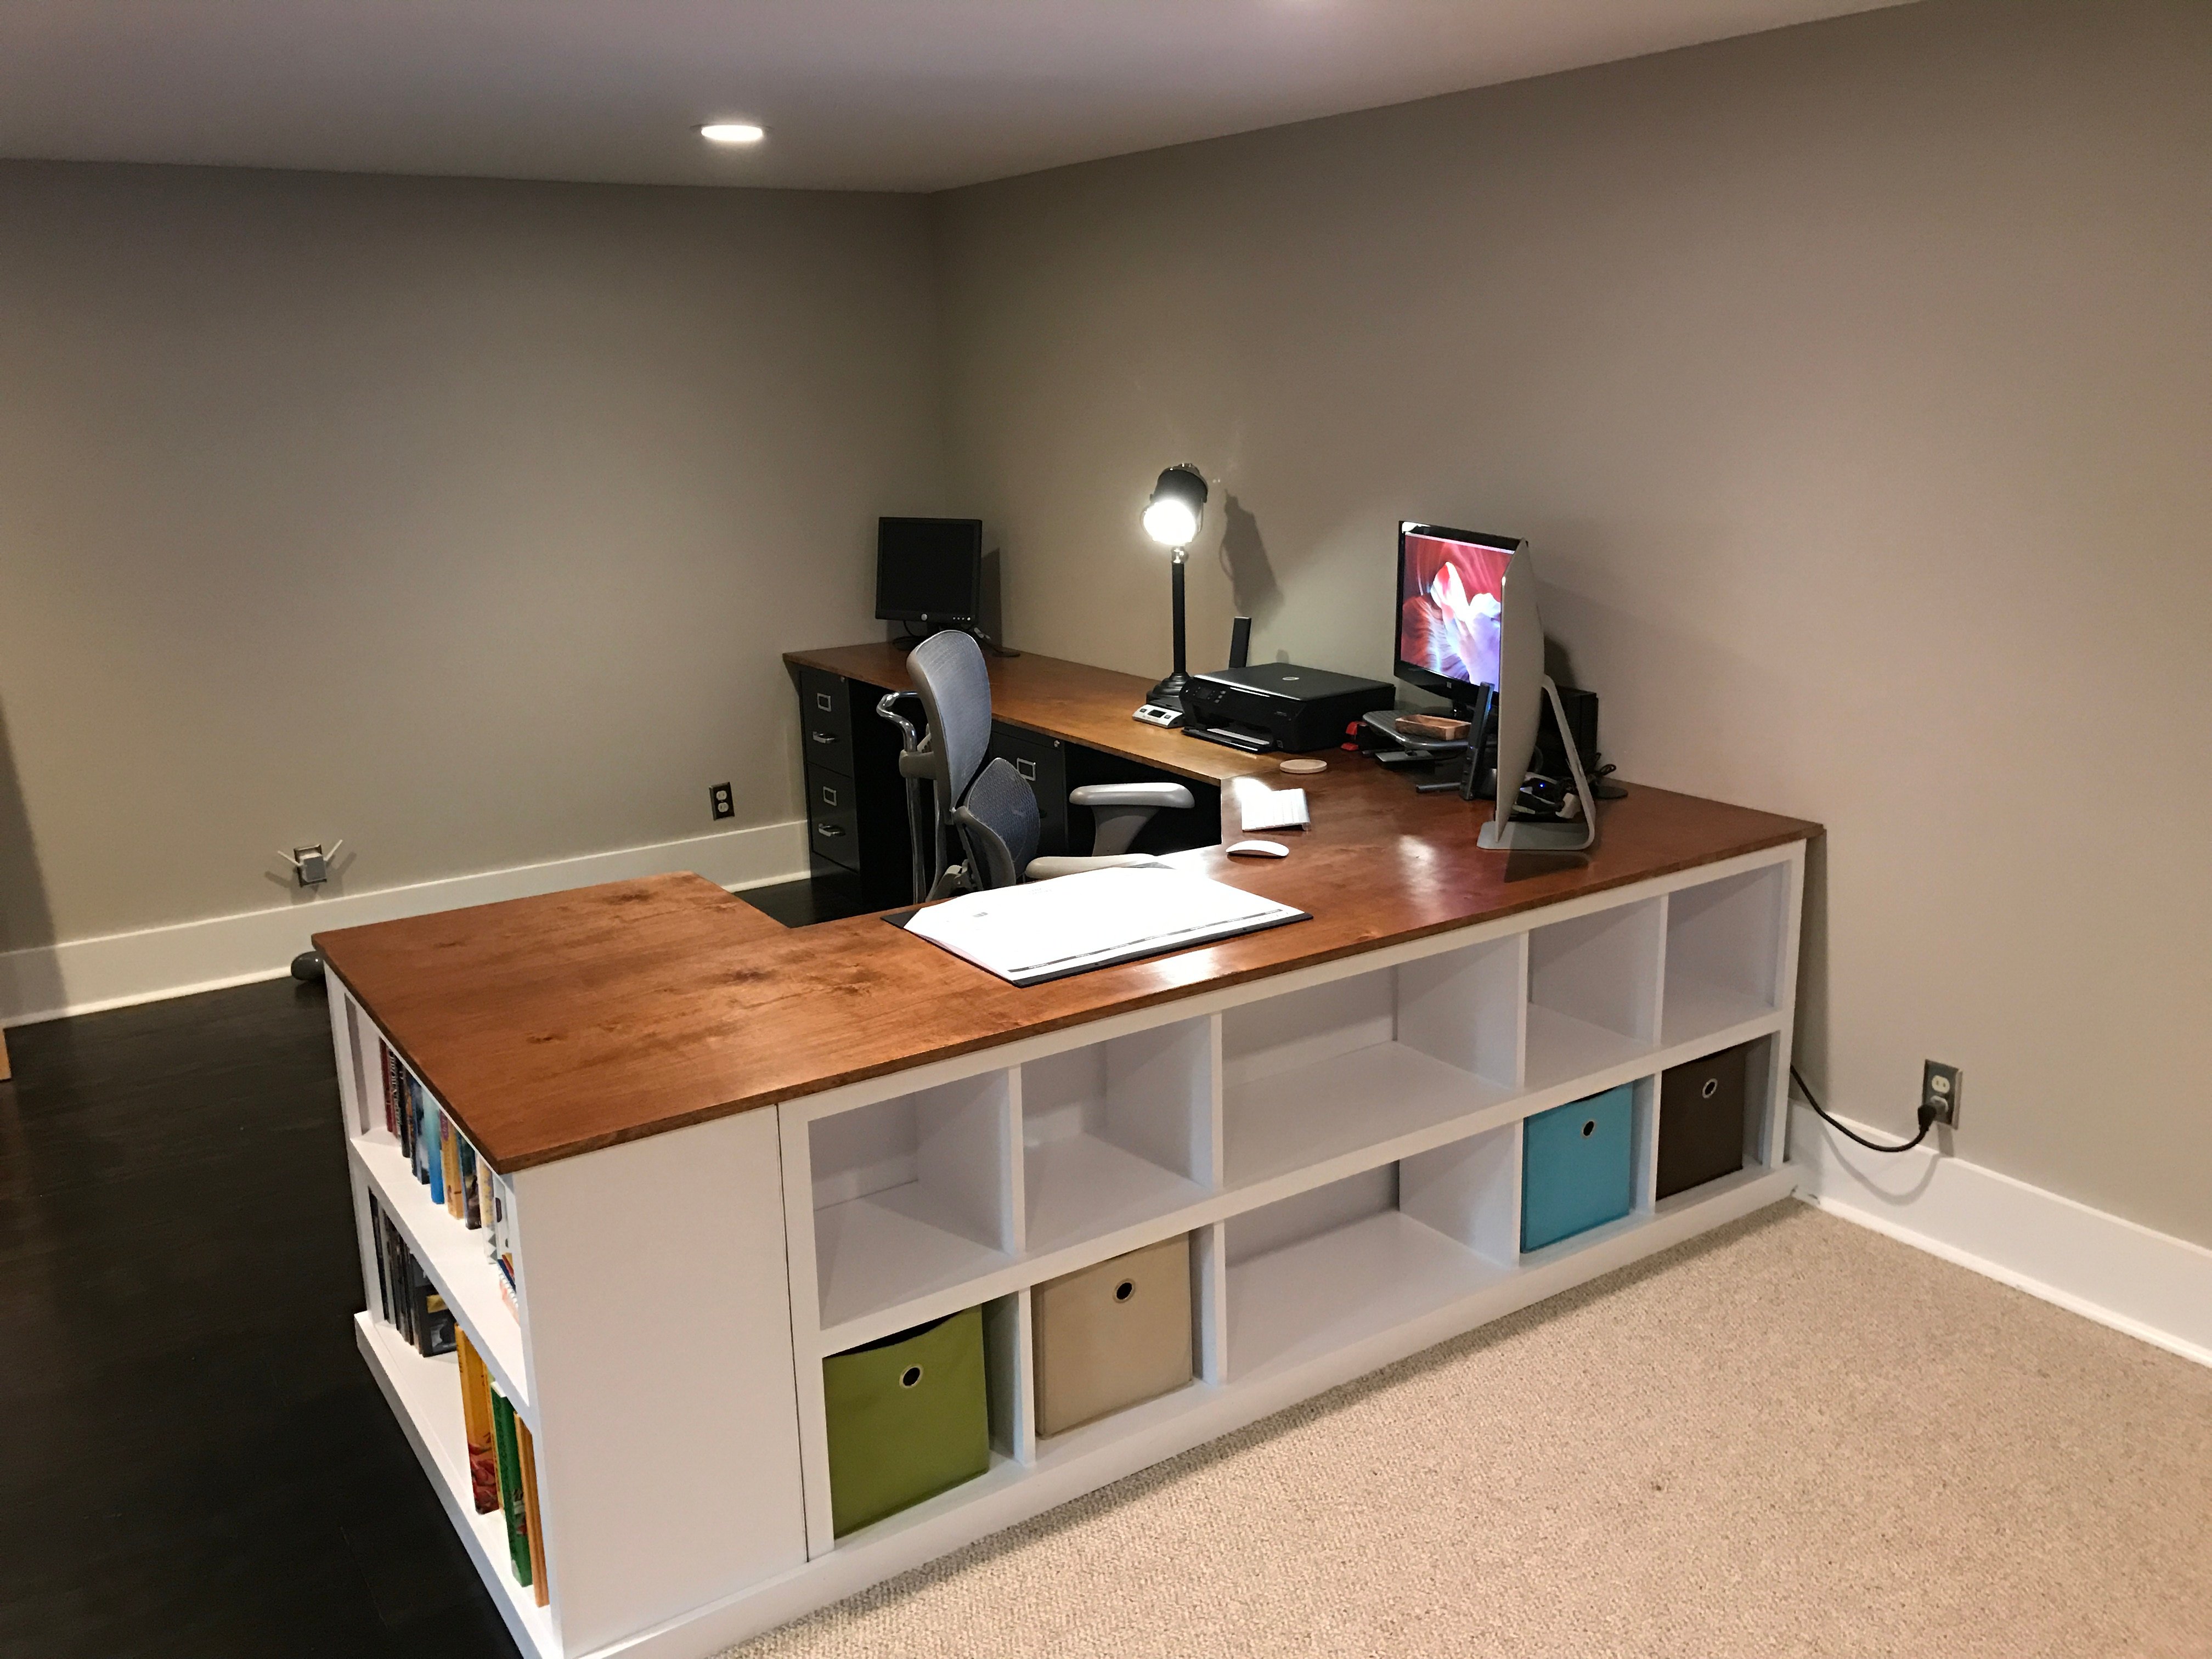 Ana White | Cubby/Bookshelf/Corner Desk Combo - DIY Projects